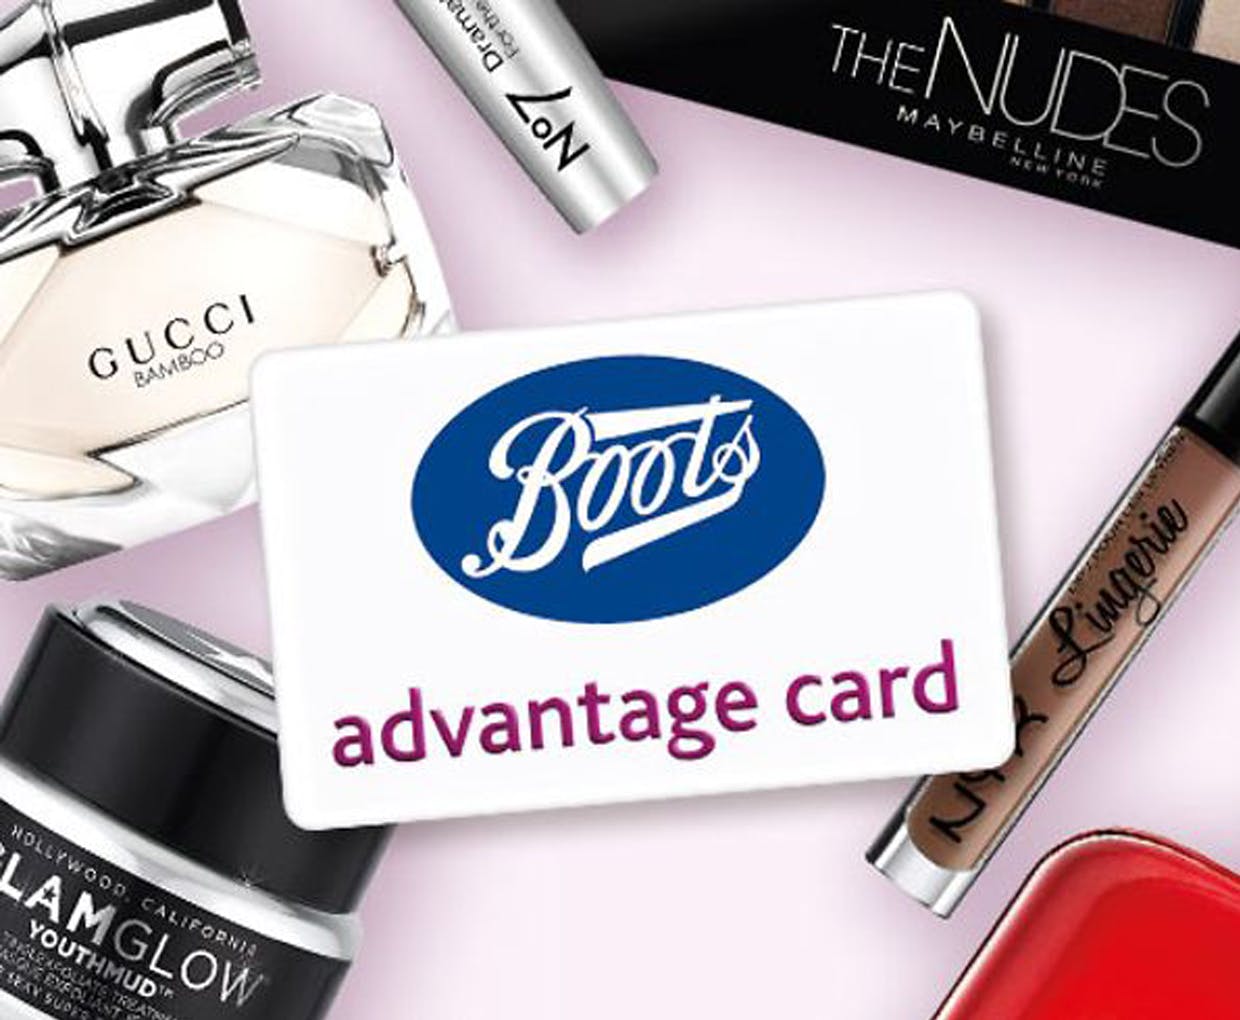 Boots makes Advantage Card loyalty scheme digital